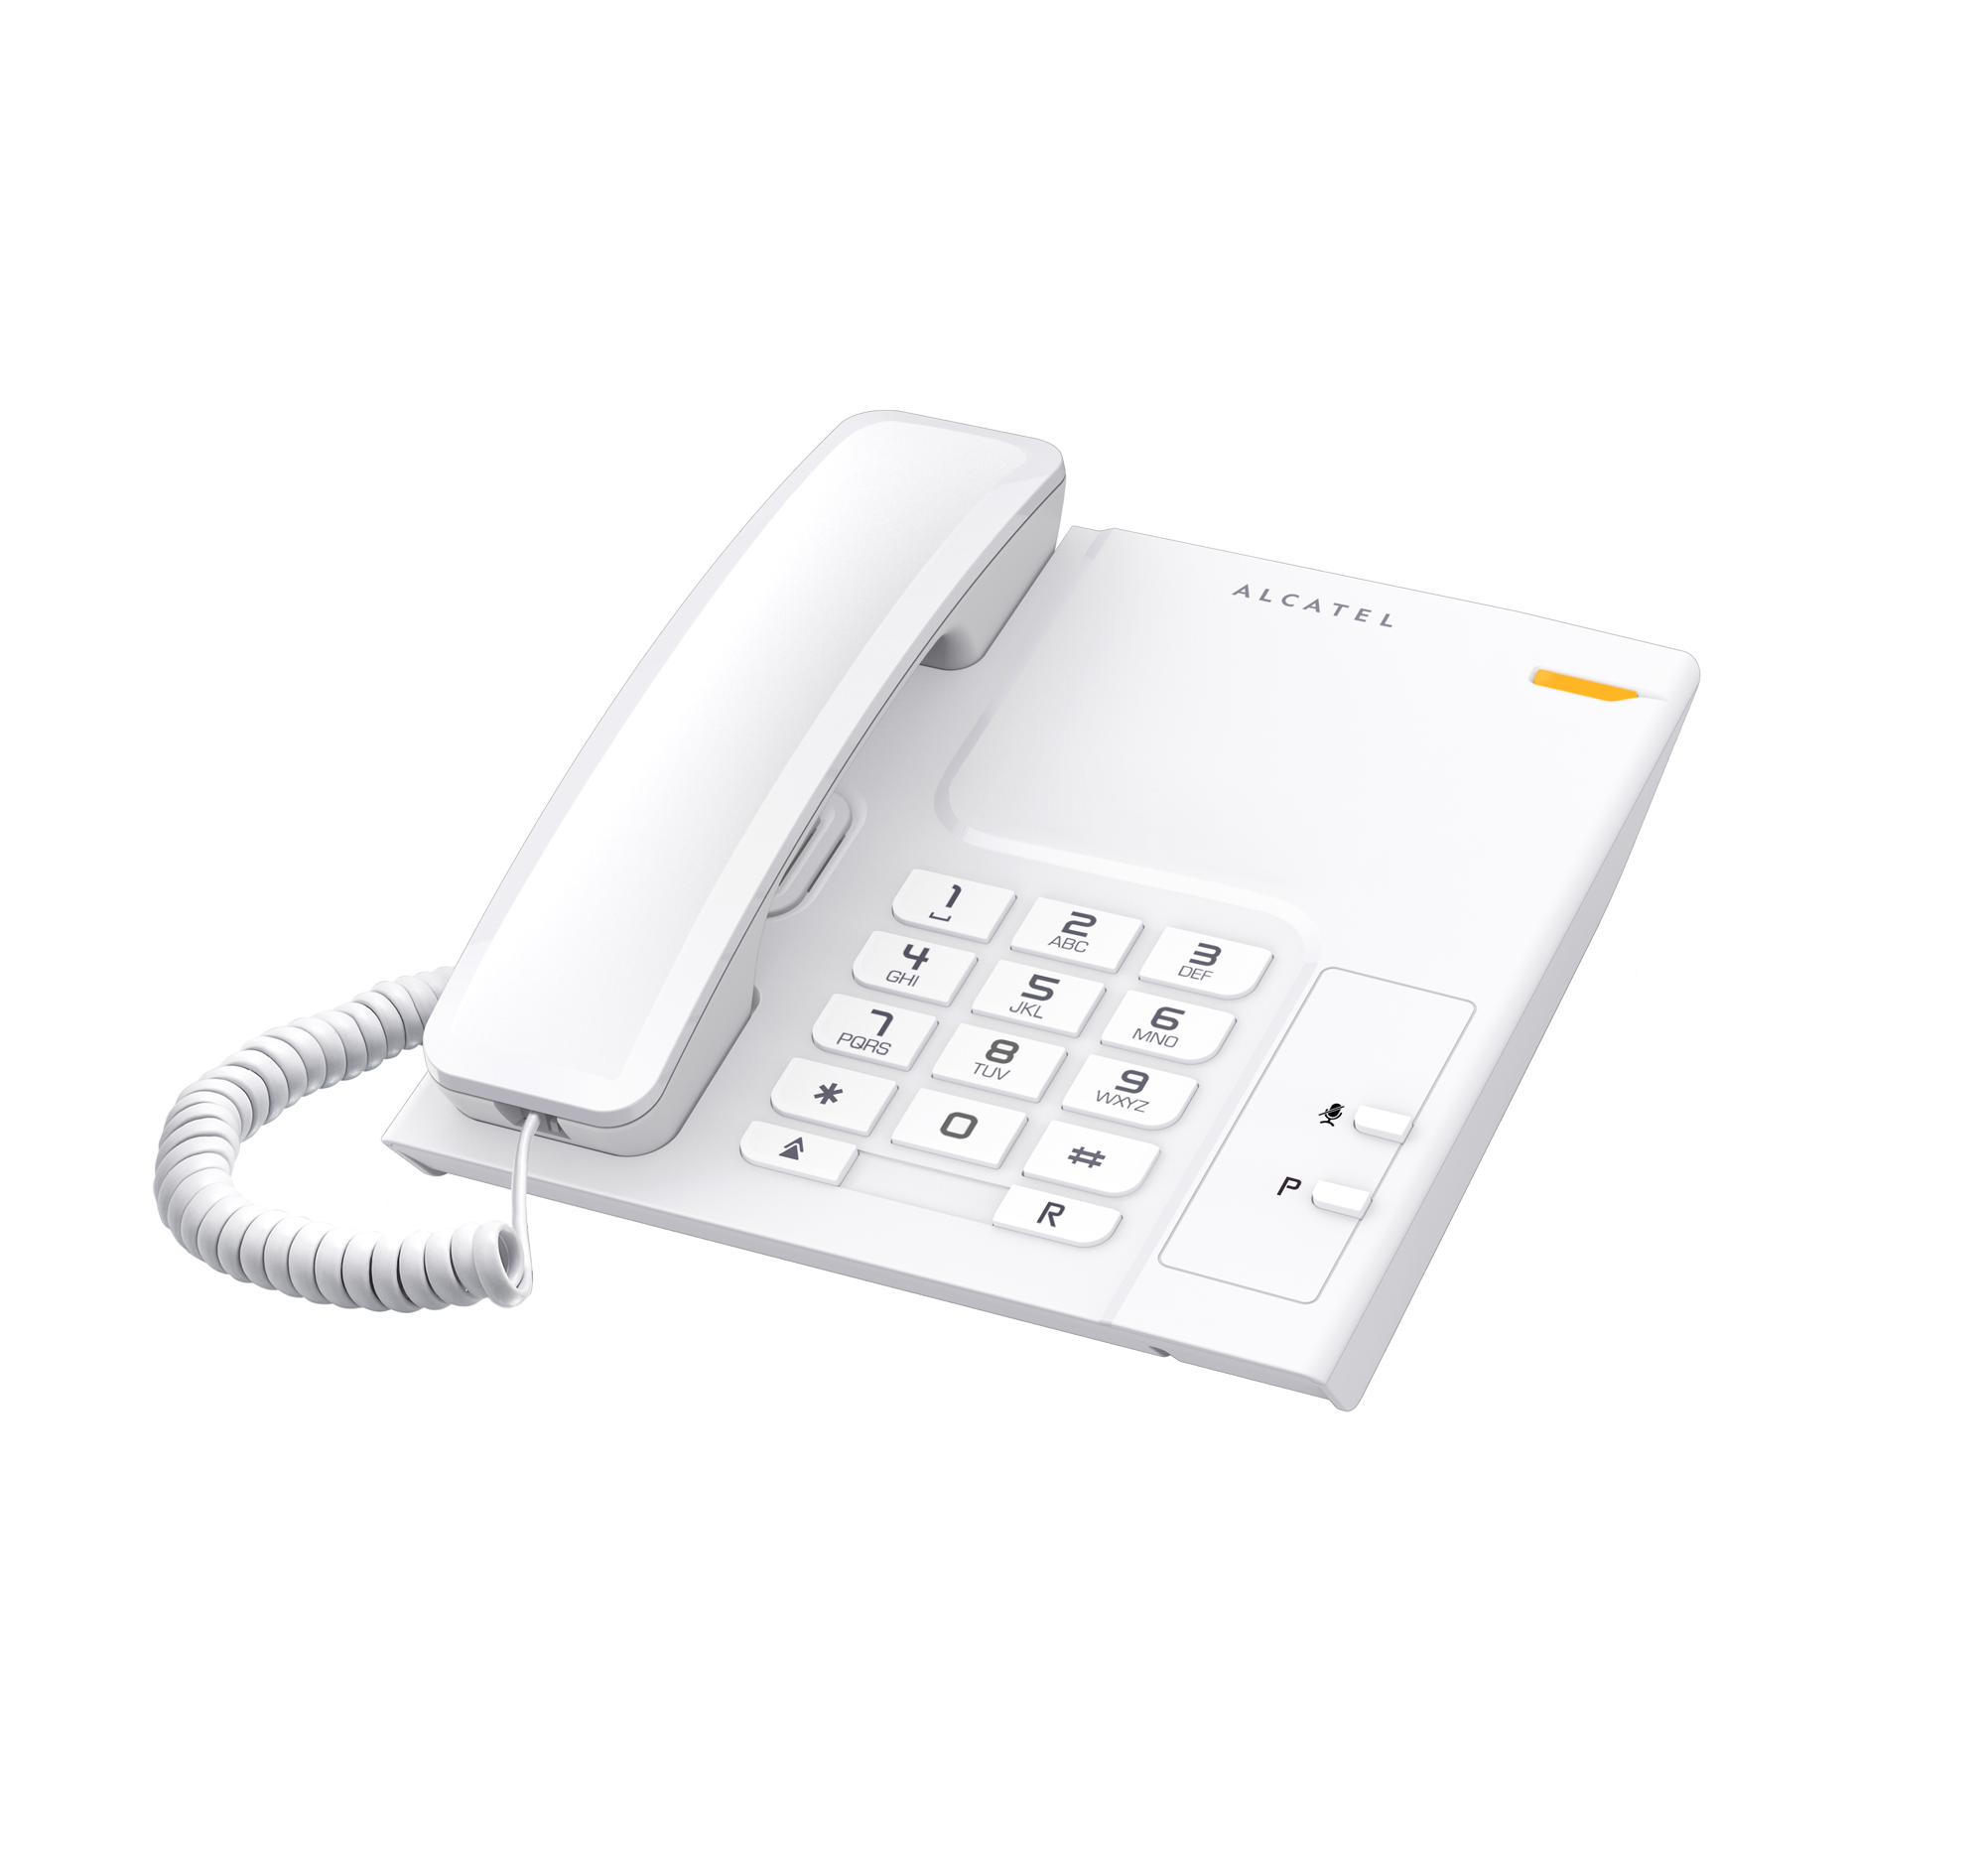 Alcatel T26 Appareil Téléphone Fixe Sans Fil Maroc TecnoCity